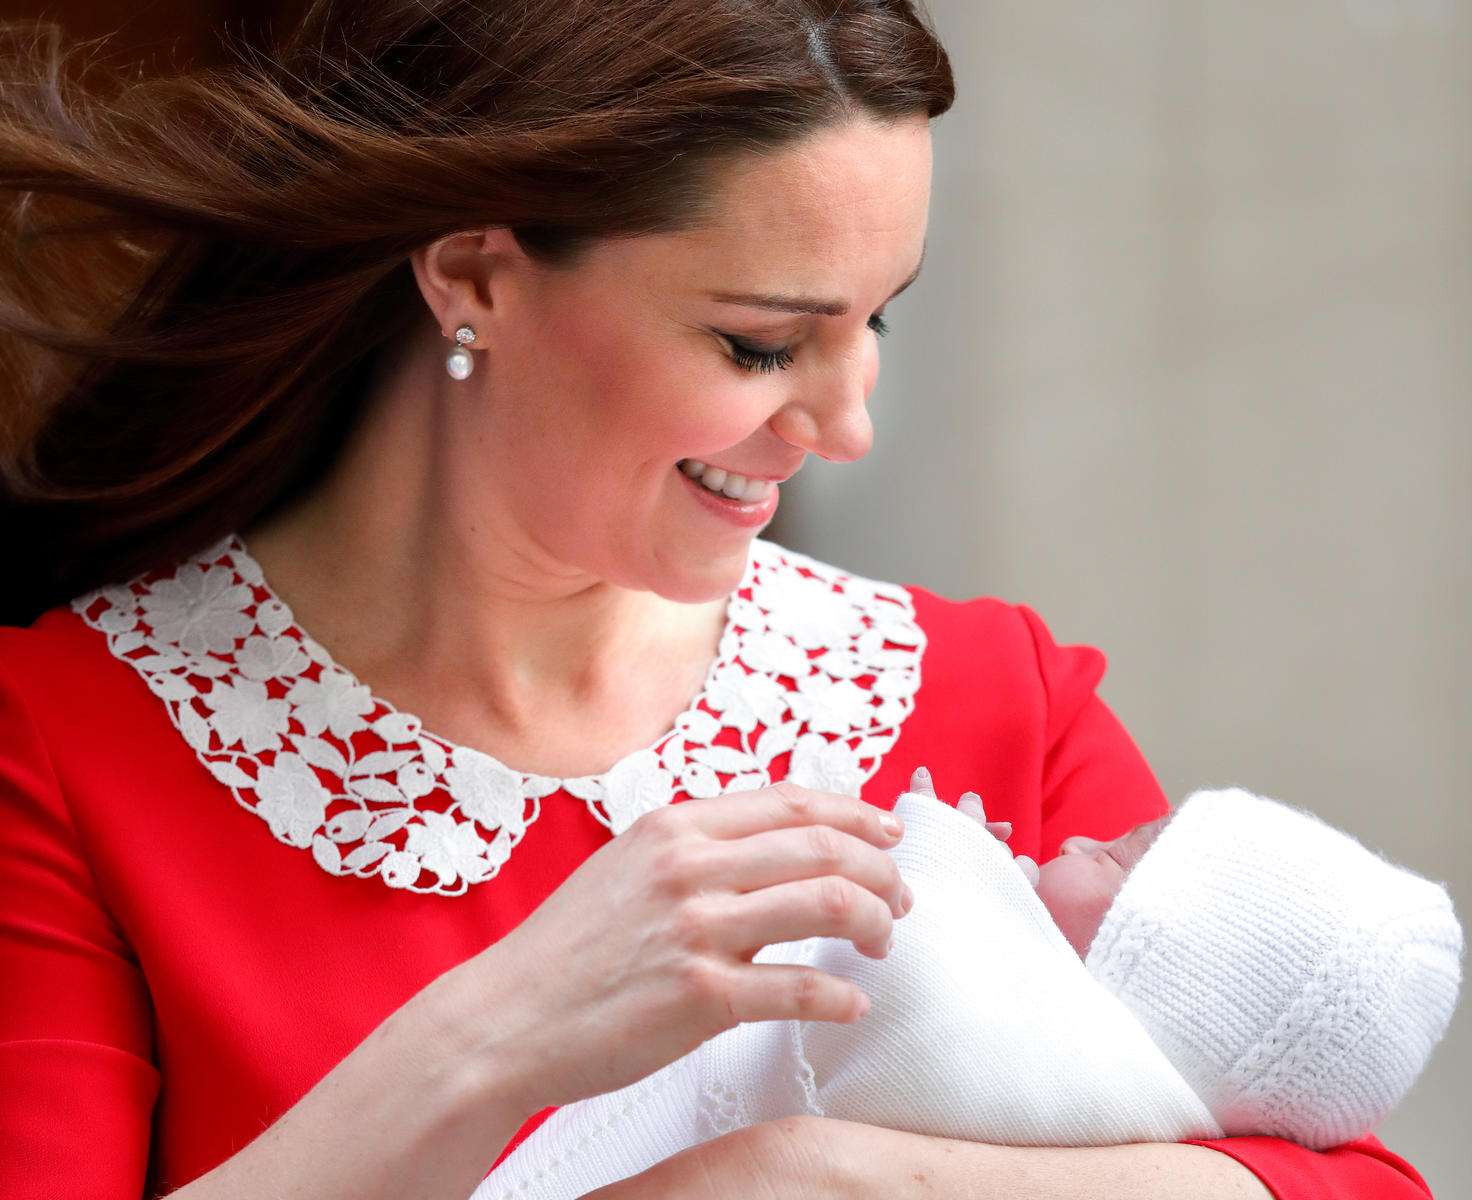 Kate Middleton Pearl Earrings Red Dress Third Child Newborn Son